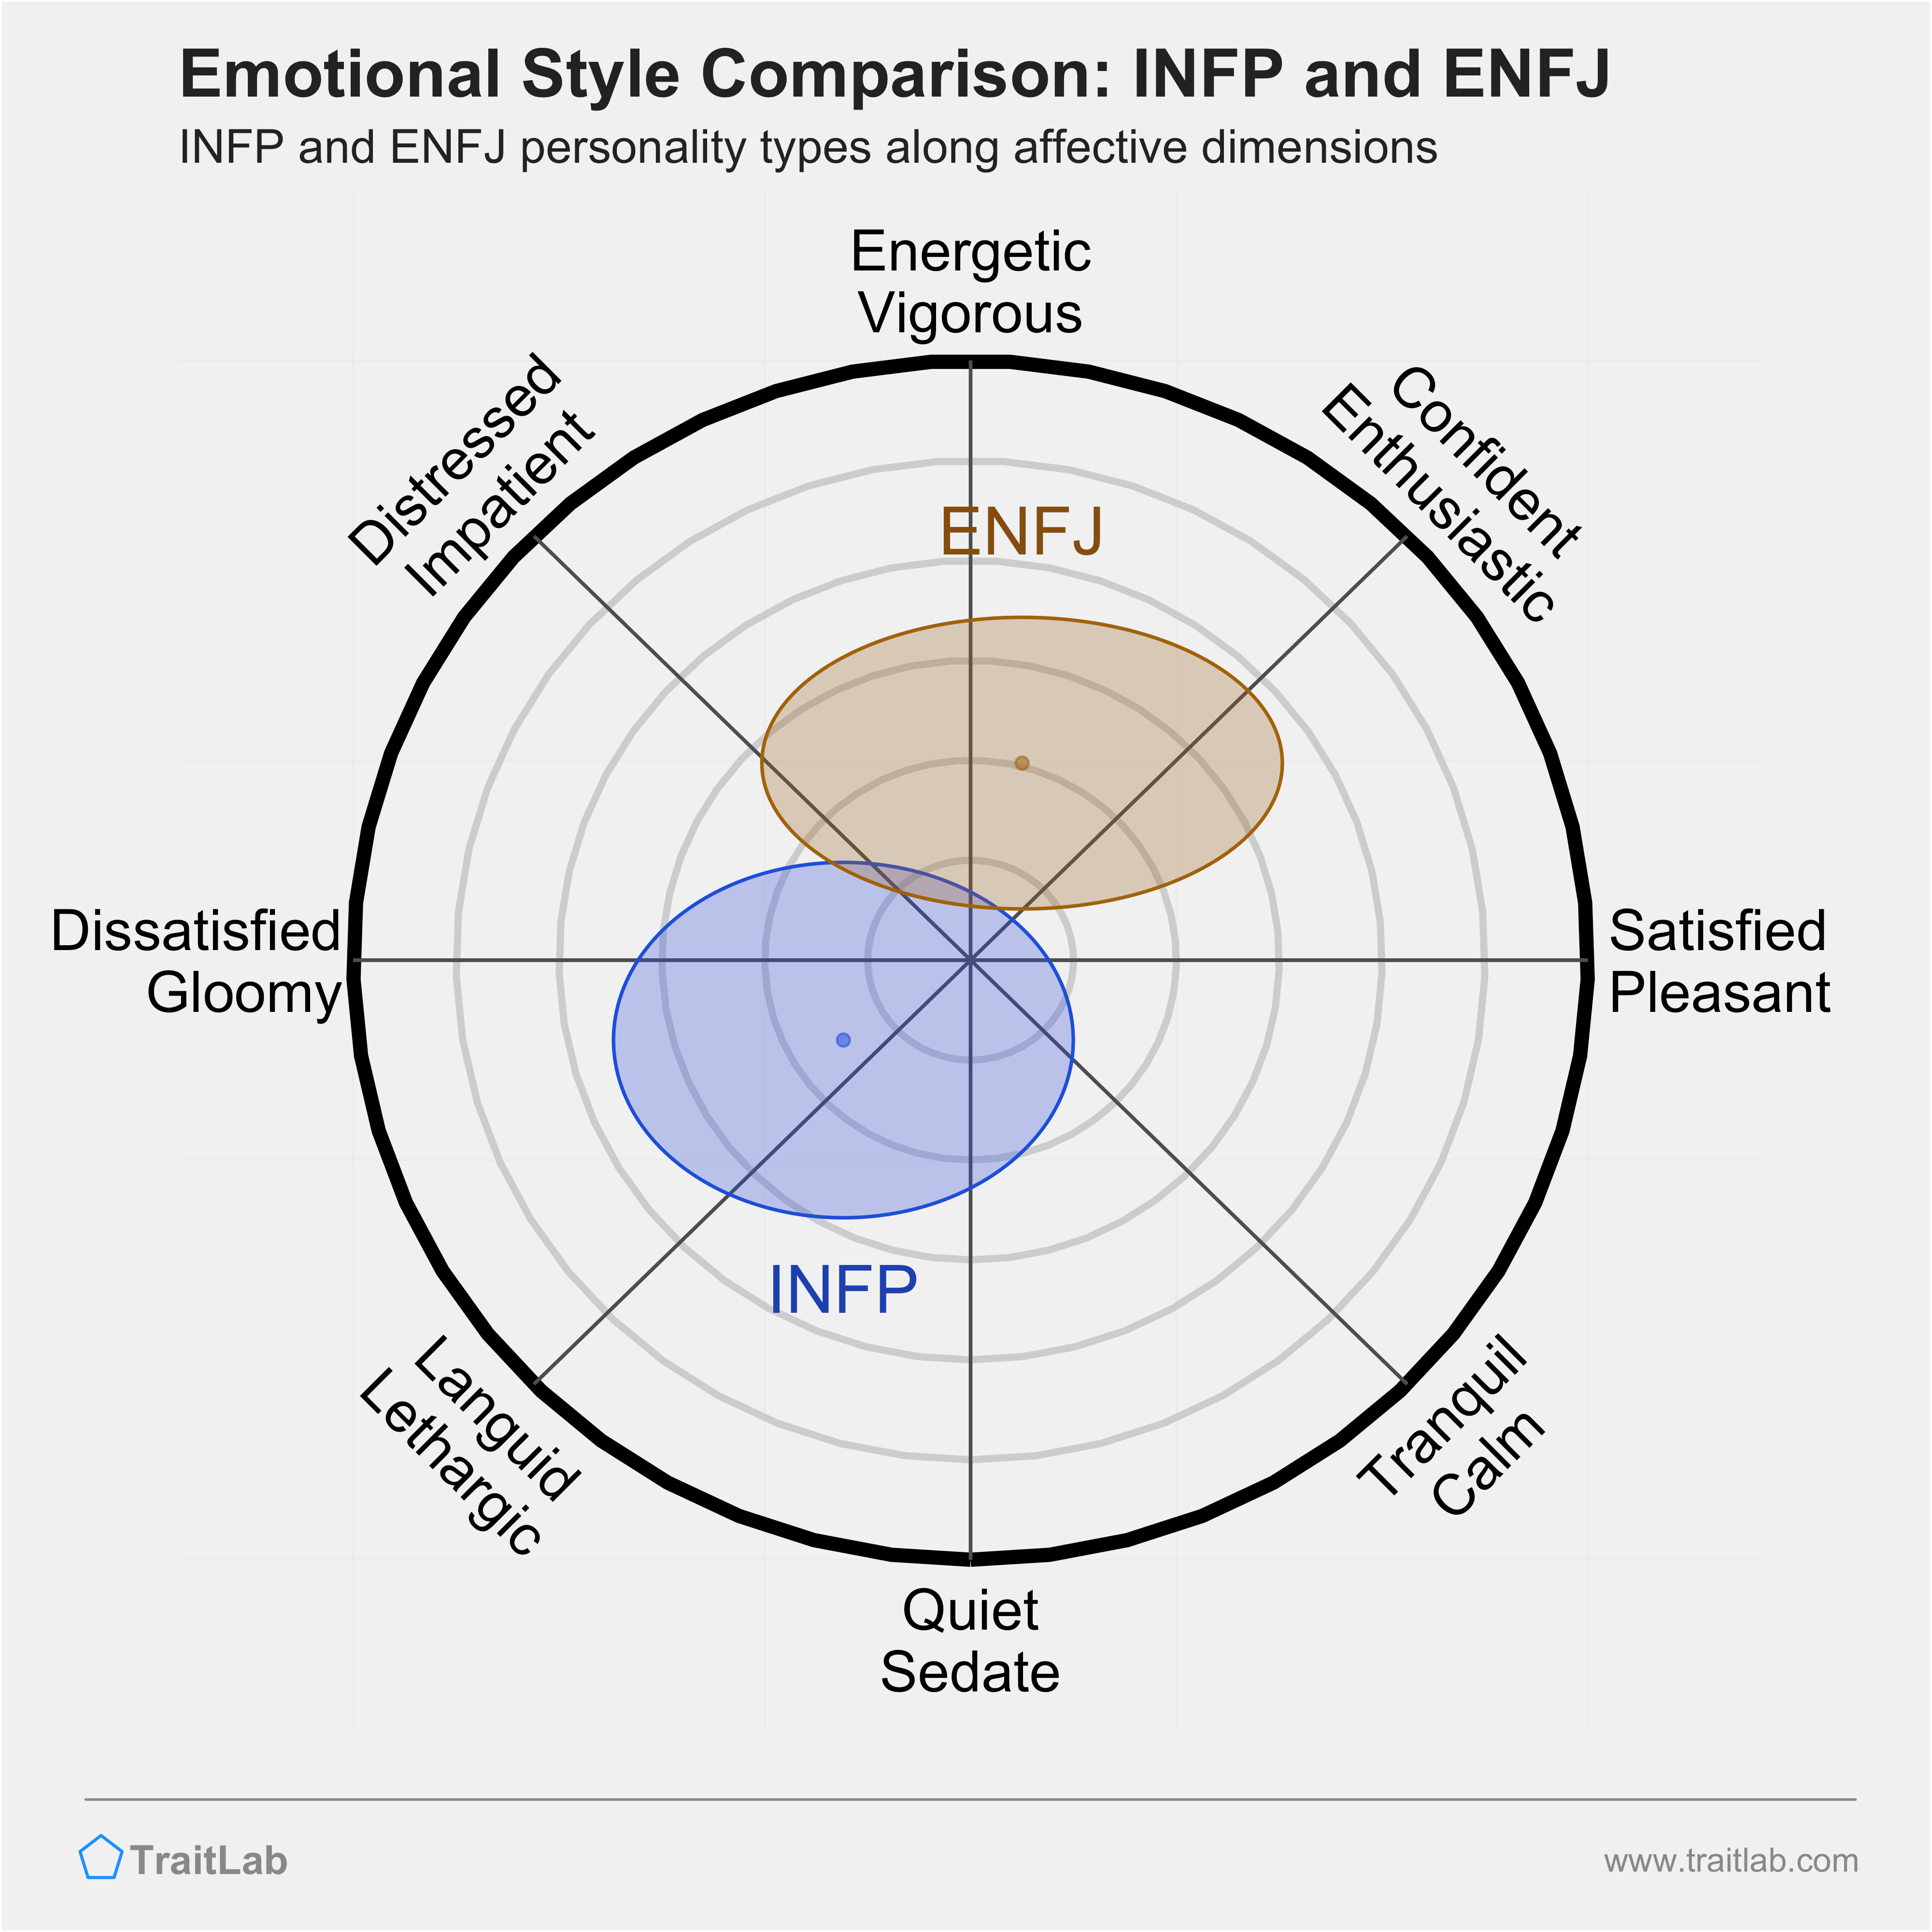 INFP and ENFJ comparison across emotional (affective) dimensions